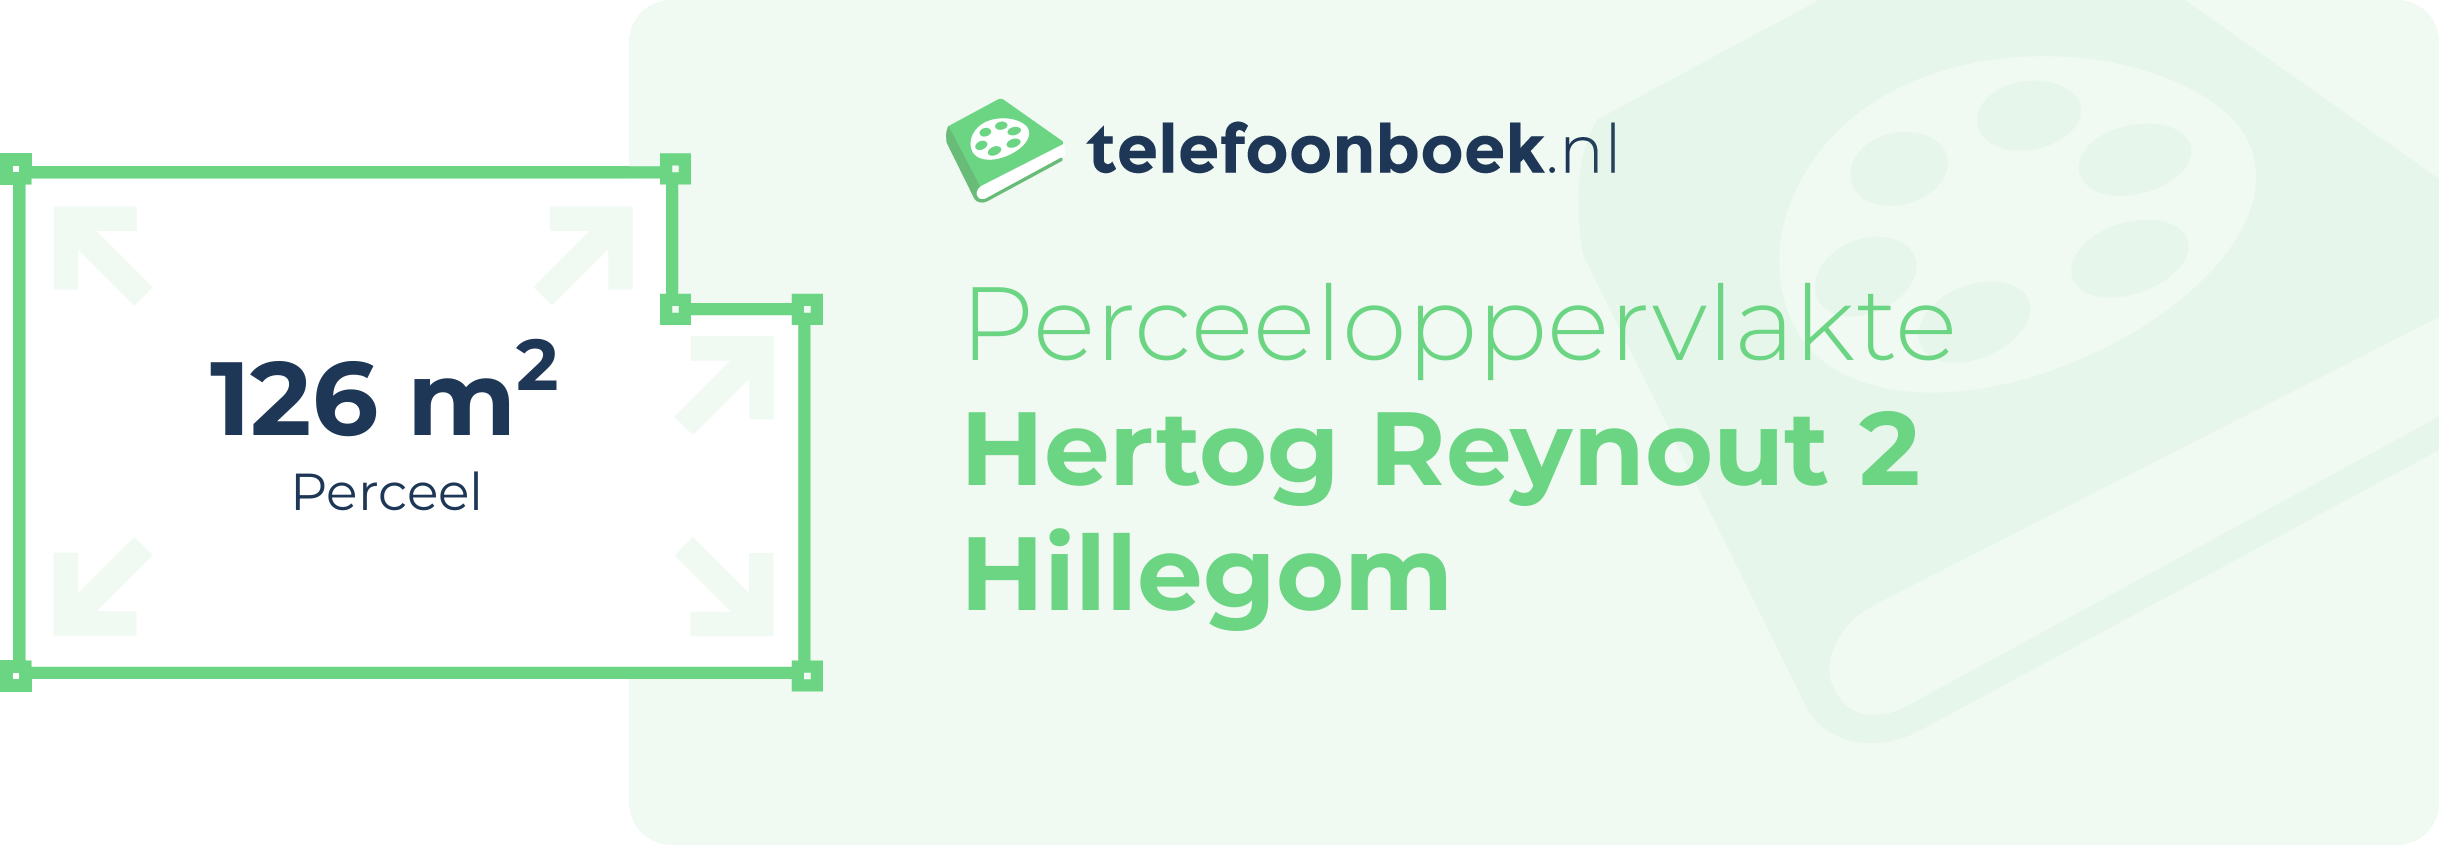 Perceeloppervlakte Hertog Reynout 2 Hillegom